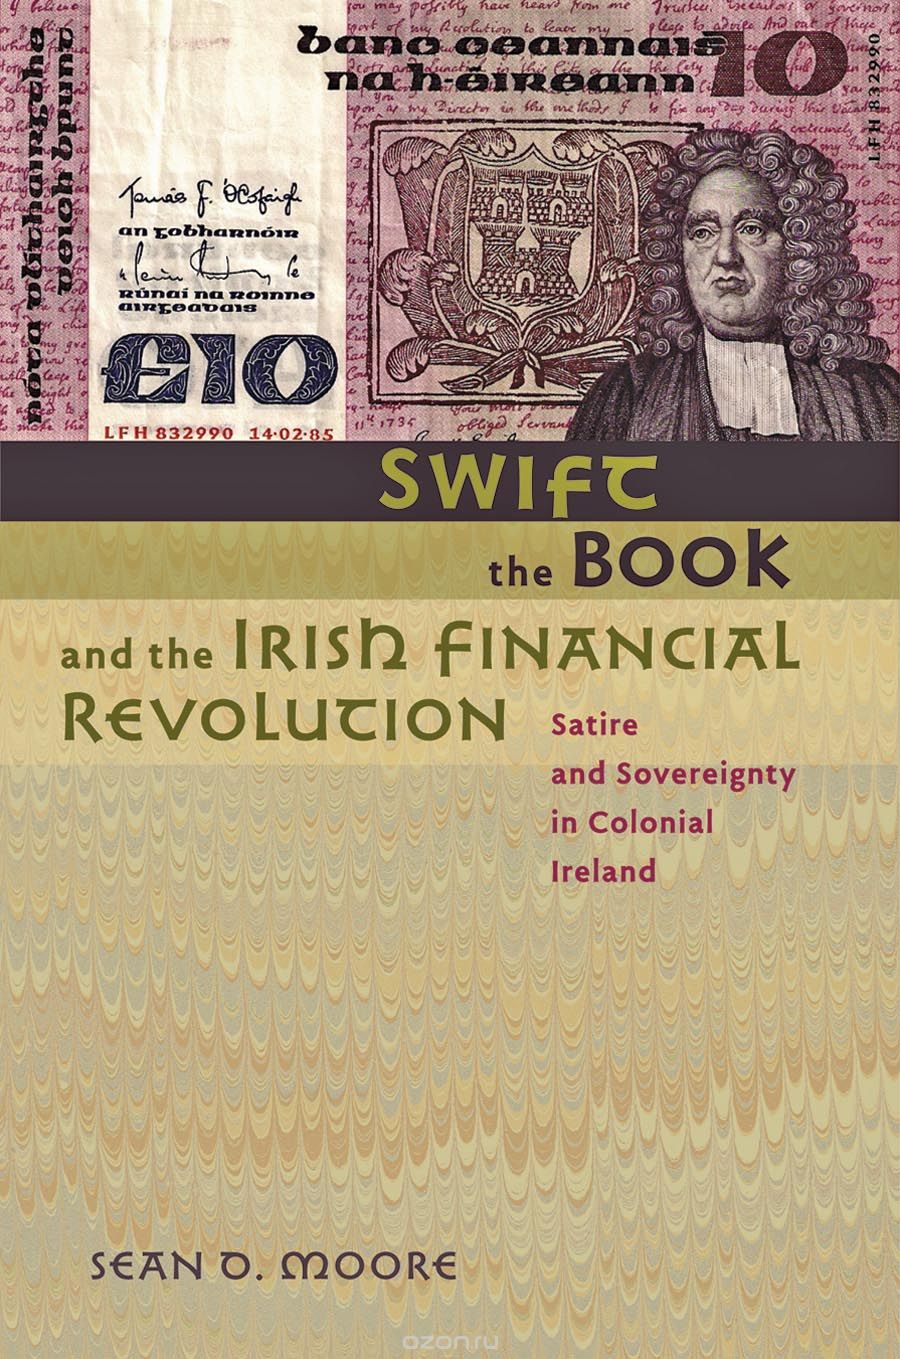 Скачать книгу "Swift, the Book, and the Irish Financial Revolution – Satire and Sovereignty in Colonial Ireland"